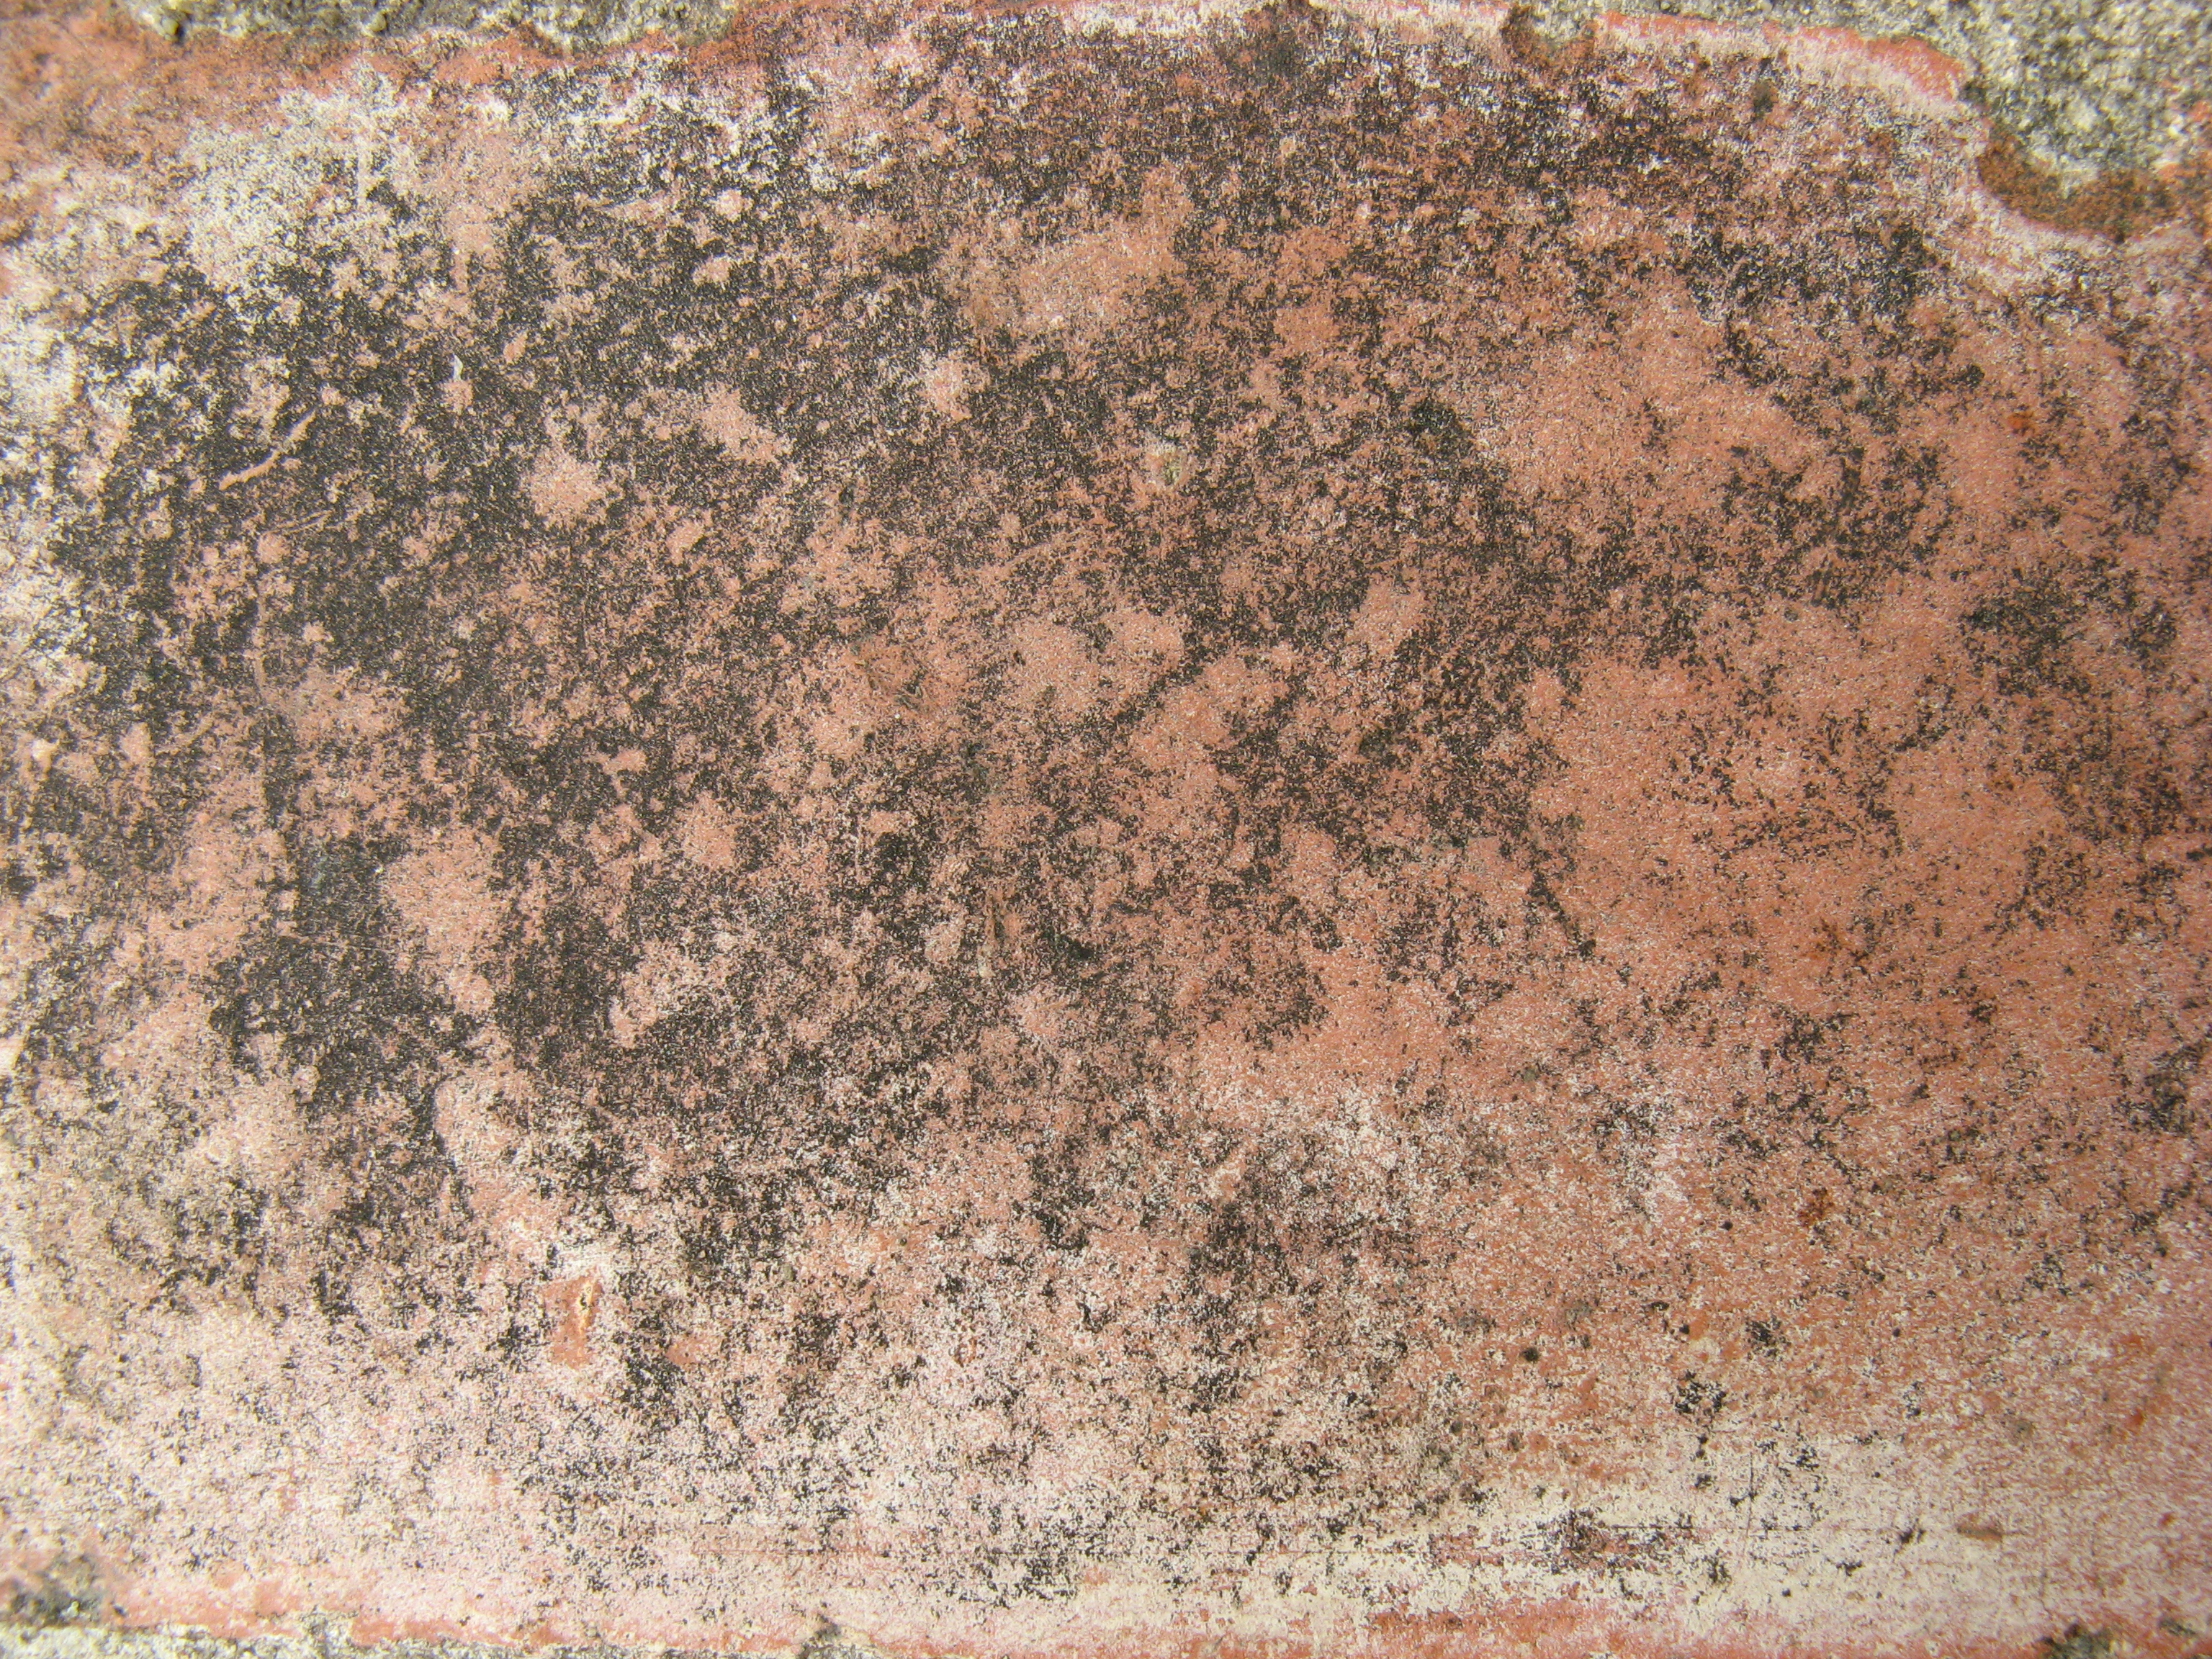 Grunge mud texture photo